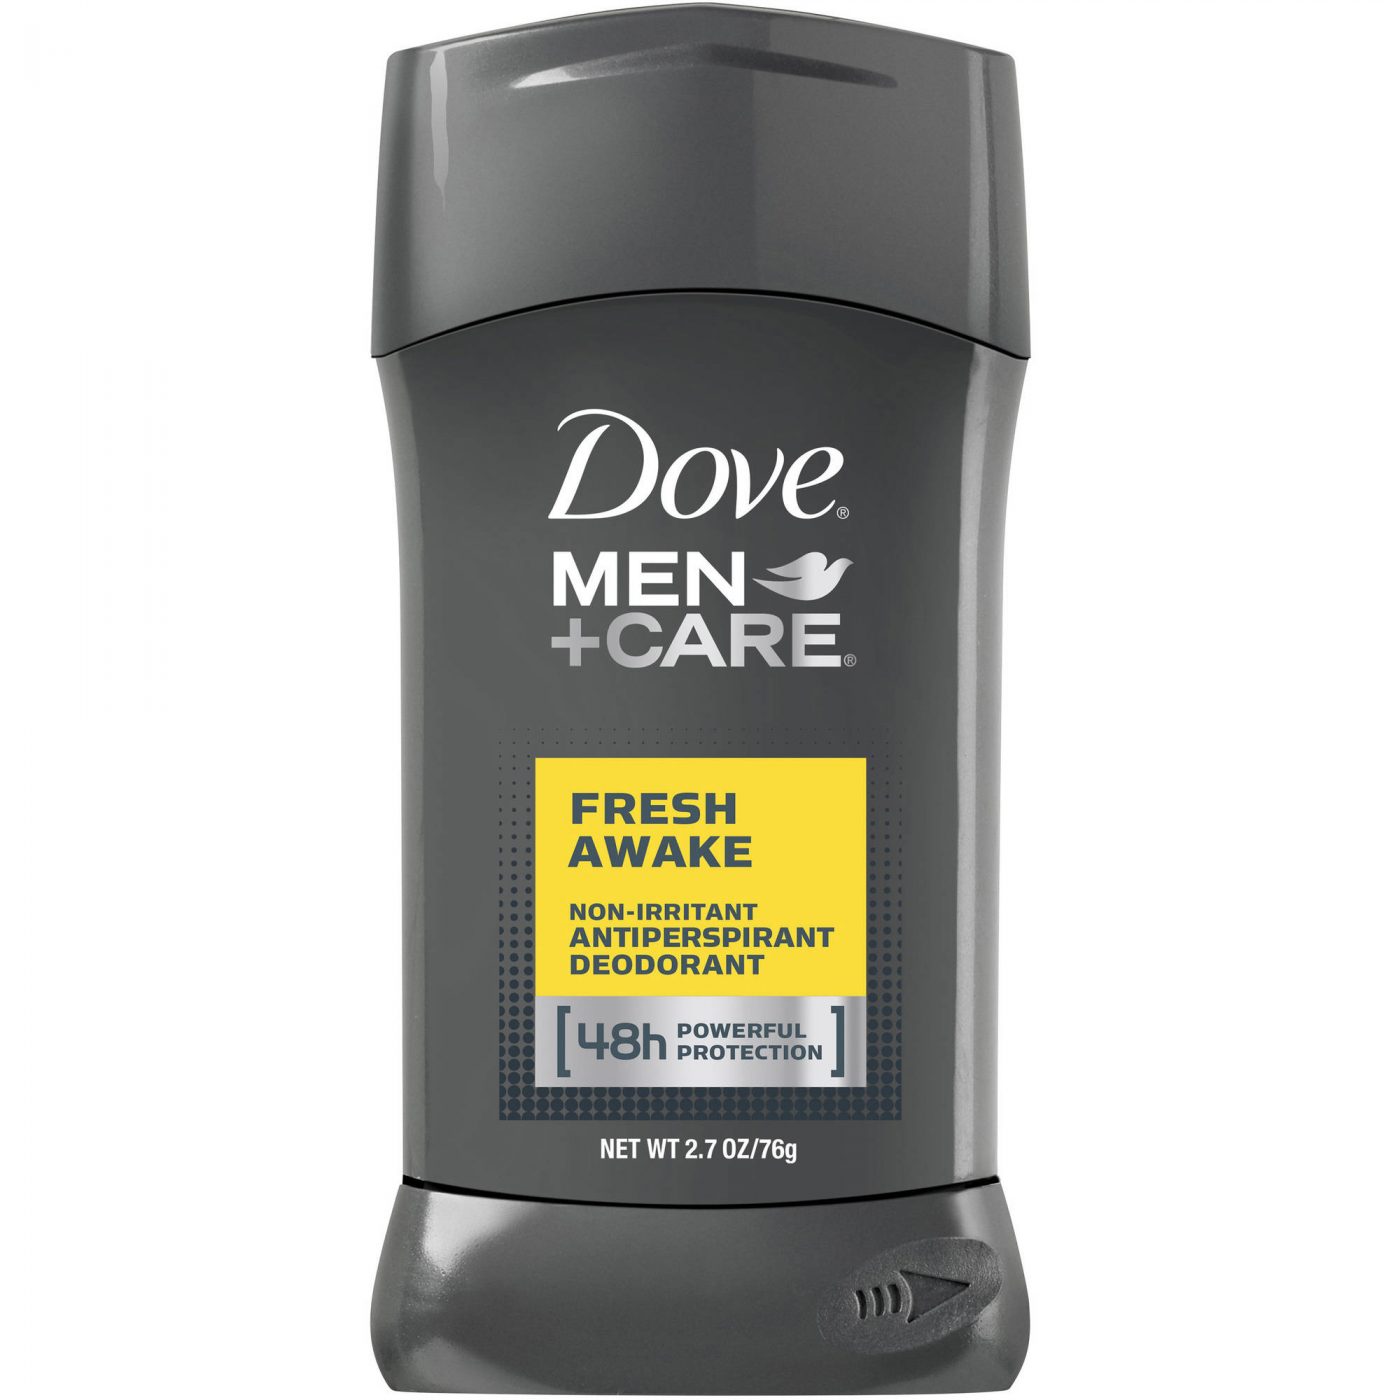 Dove Men+Care Fresh Awake Deodorant